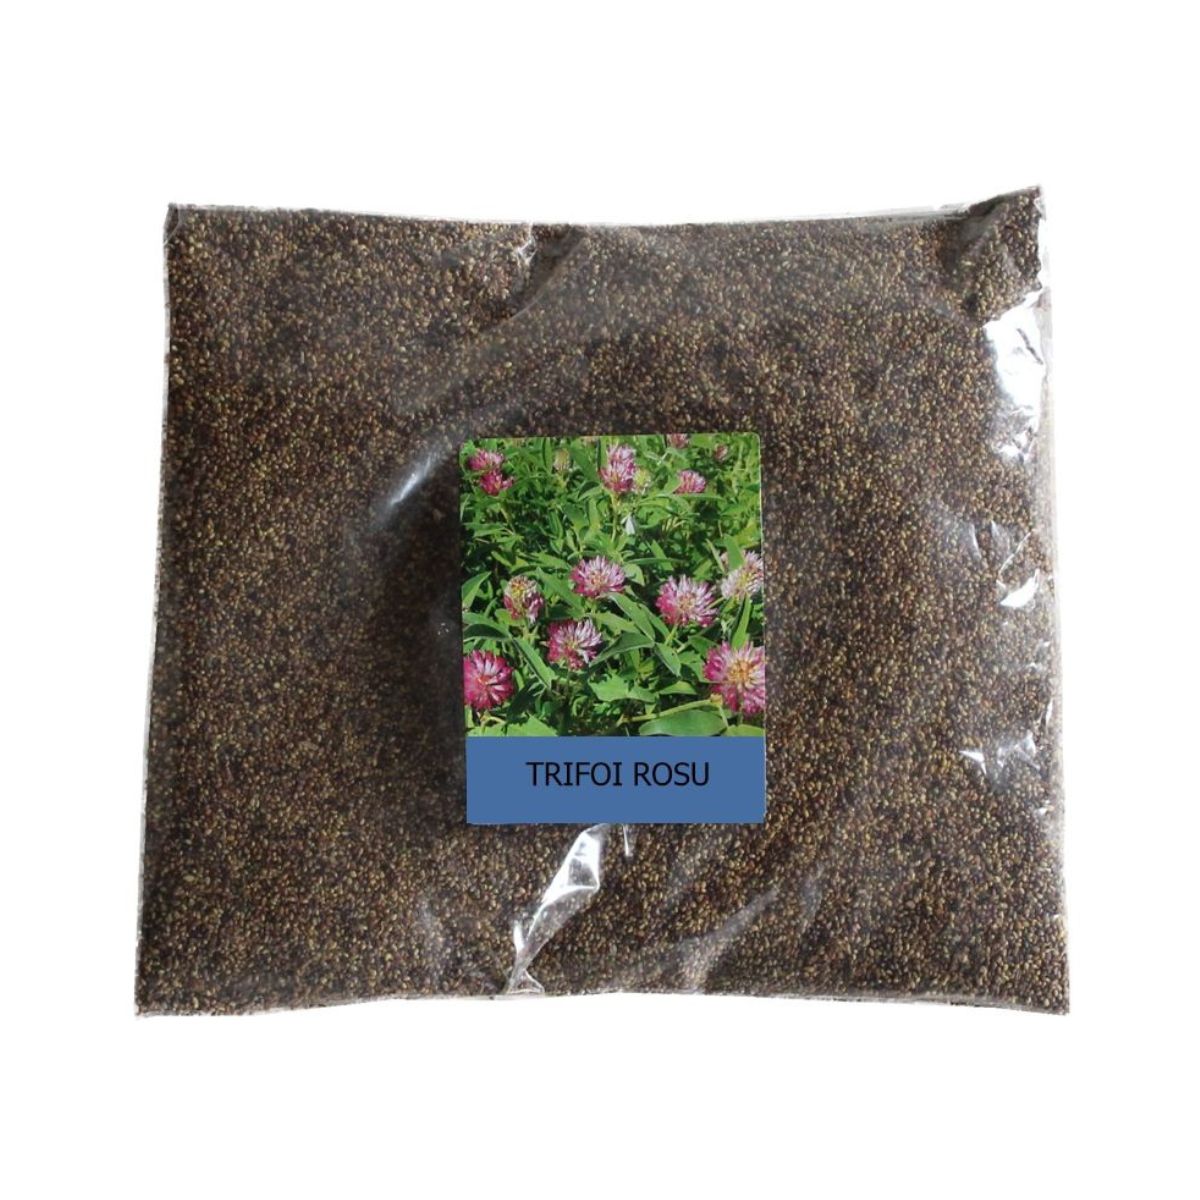 Seminte flori - Seminte de Trifoi Rosu, 1KG, hectarul.ro